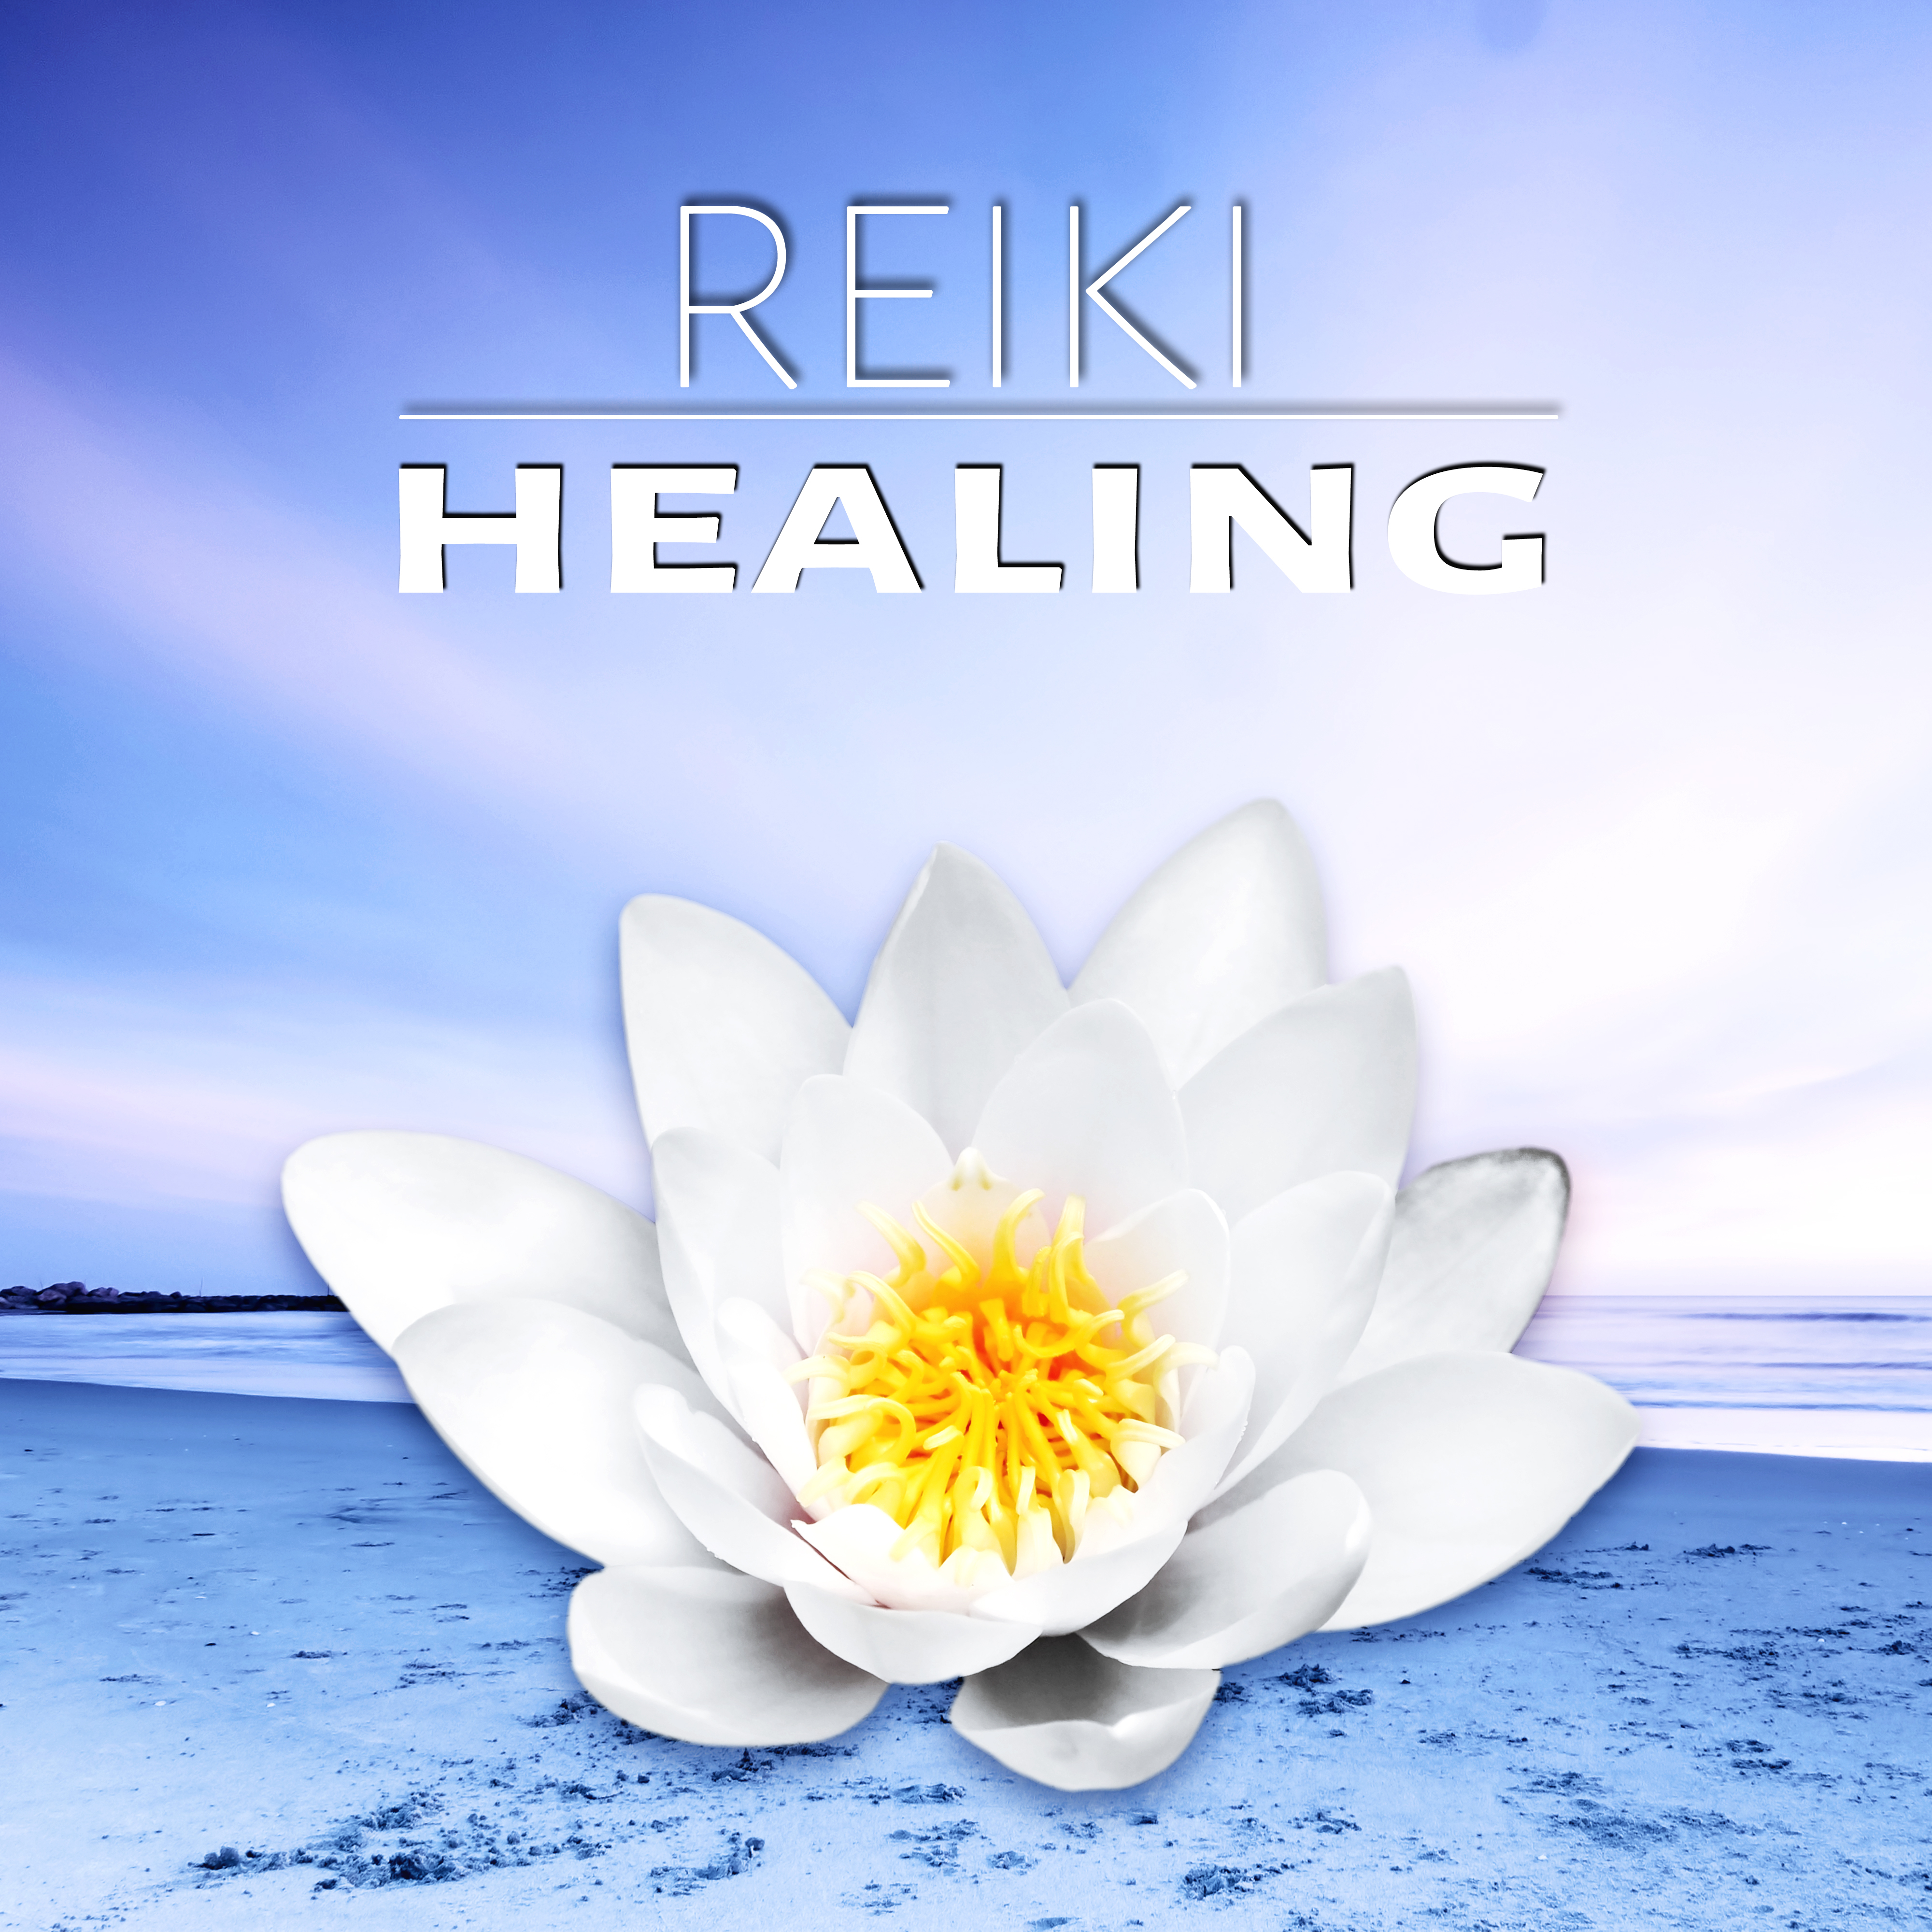 Reiki Healing - Massage & Mindfullness Meditation, Relaxation Music, Serenity Spa Piano Music, Yoga Music Collection